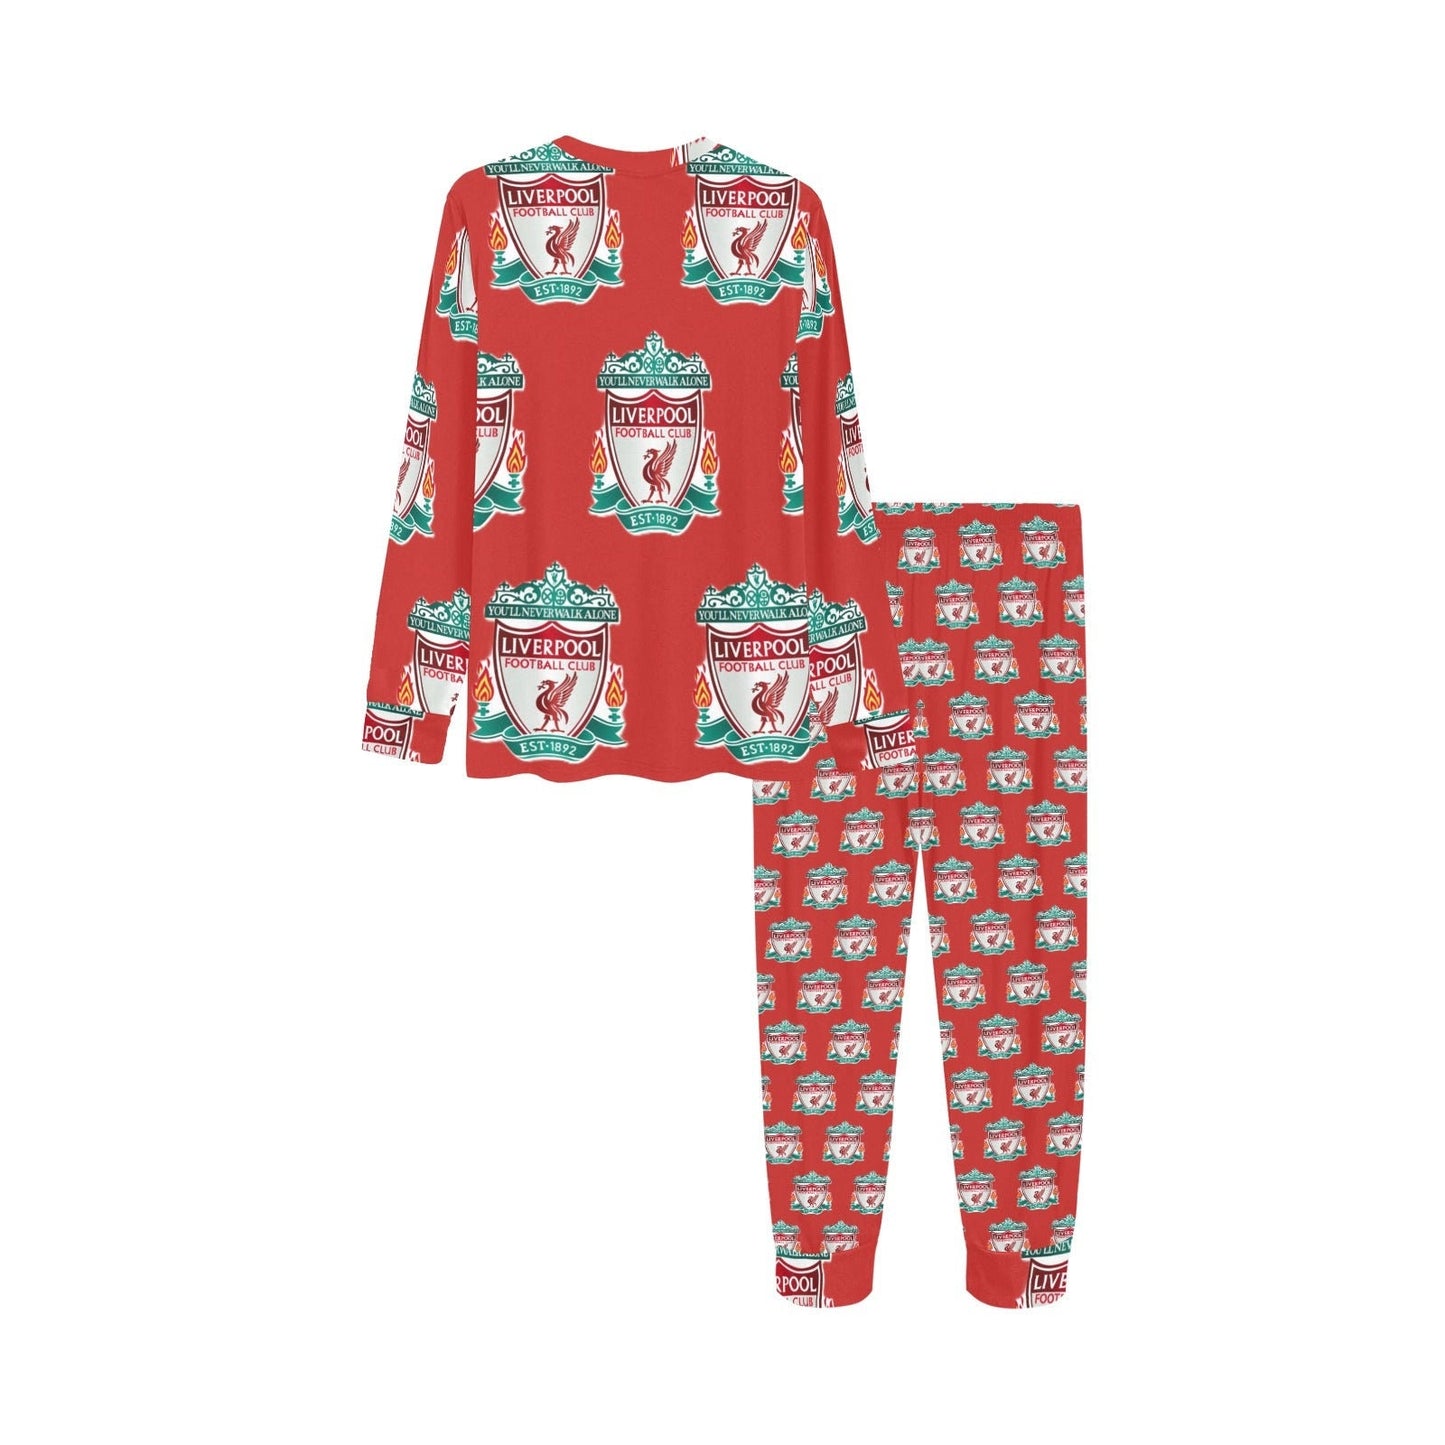 Liverpool is My Valentine • Valentines Day Kids Gift • Kids Soccer Pajamas • Custom LFC Soccer Gift